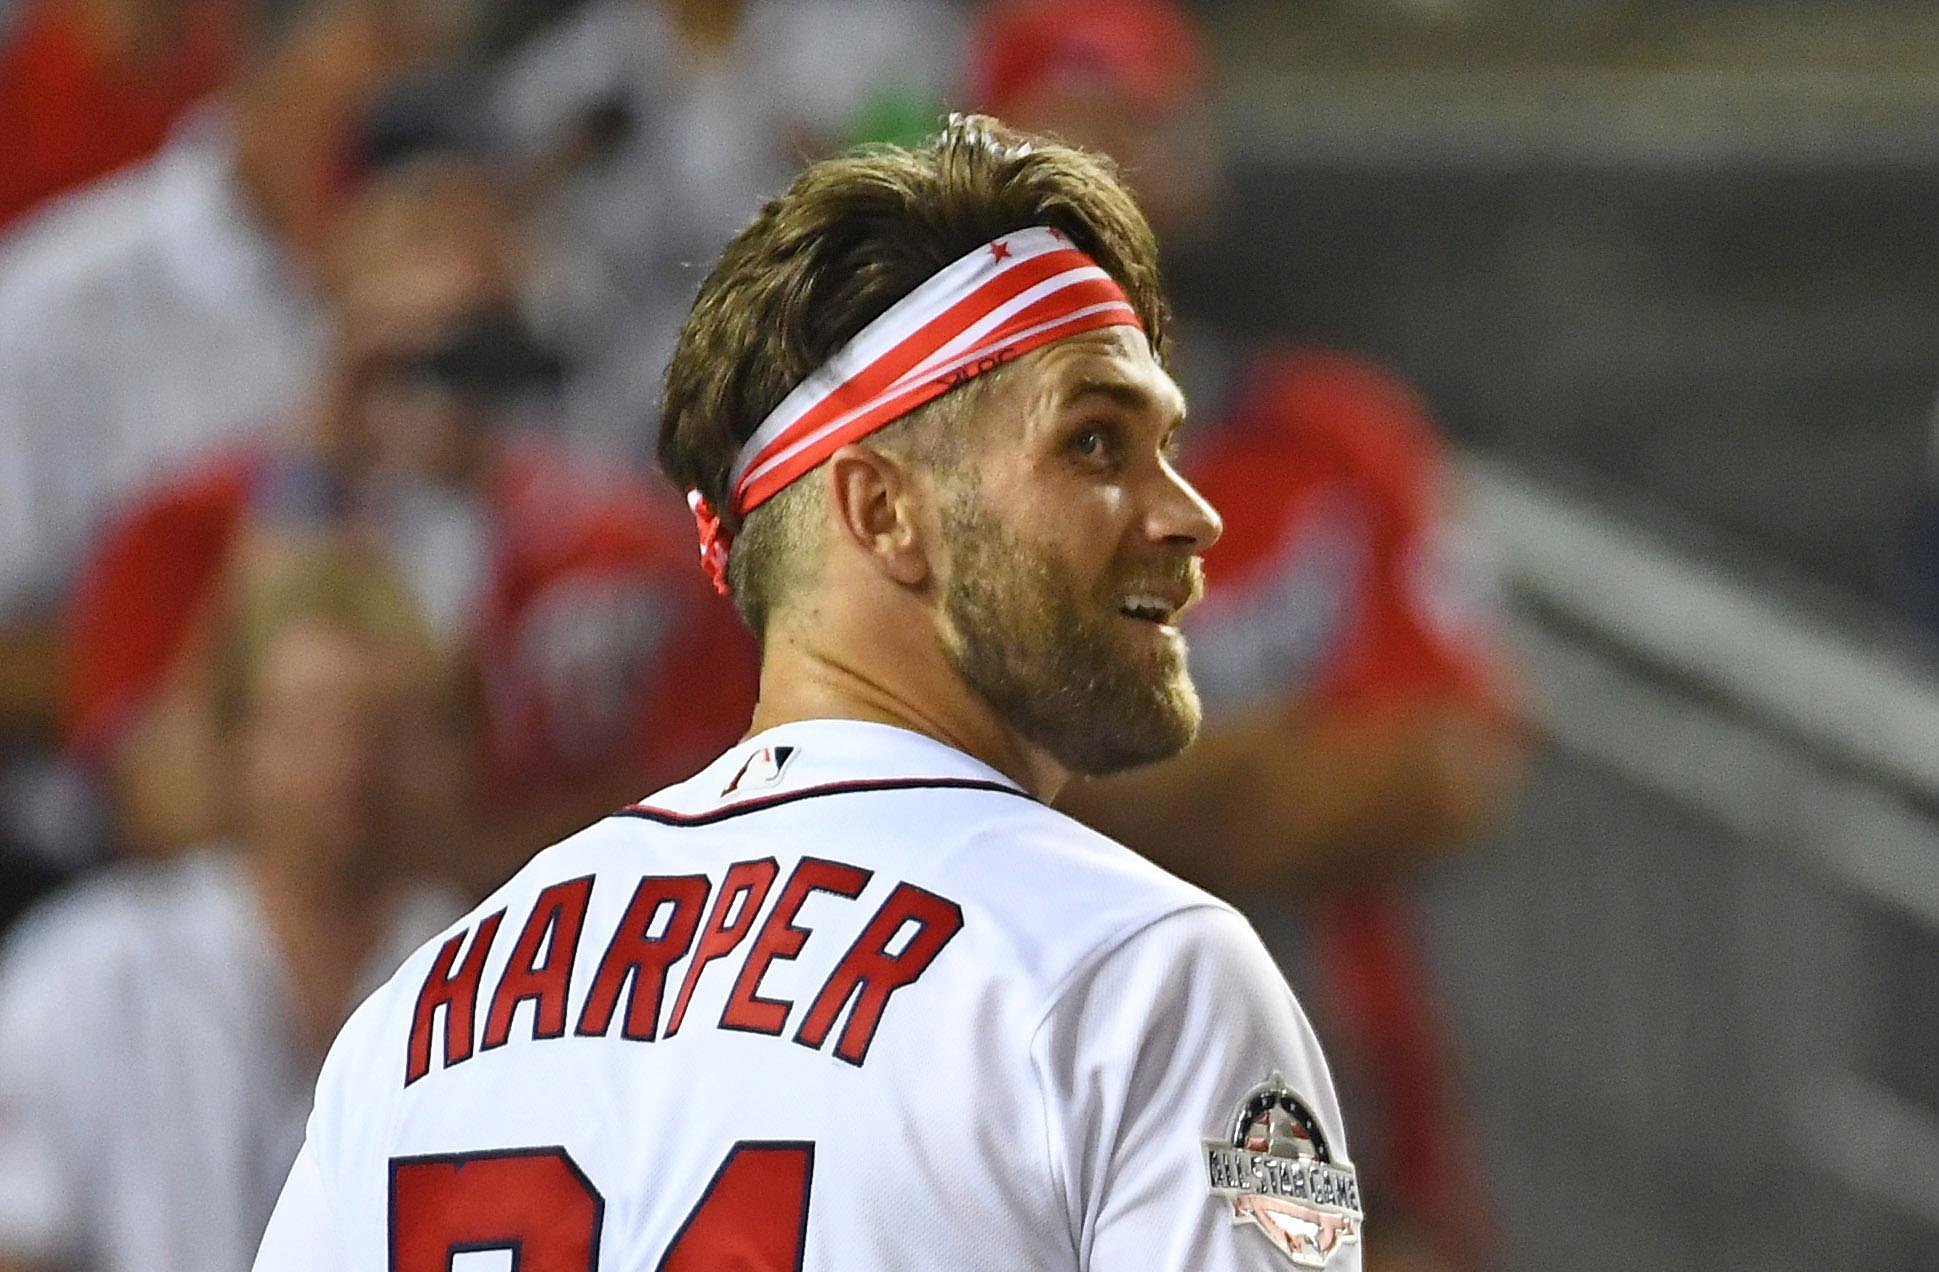 Nationals' Bryce Harper walks it off to win 2018 Home Run Derby in D.C.